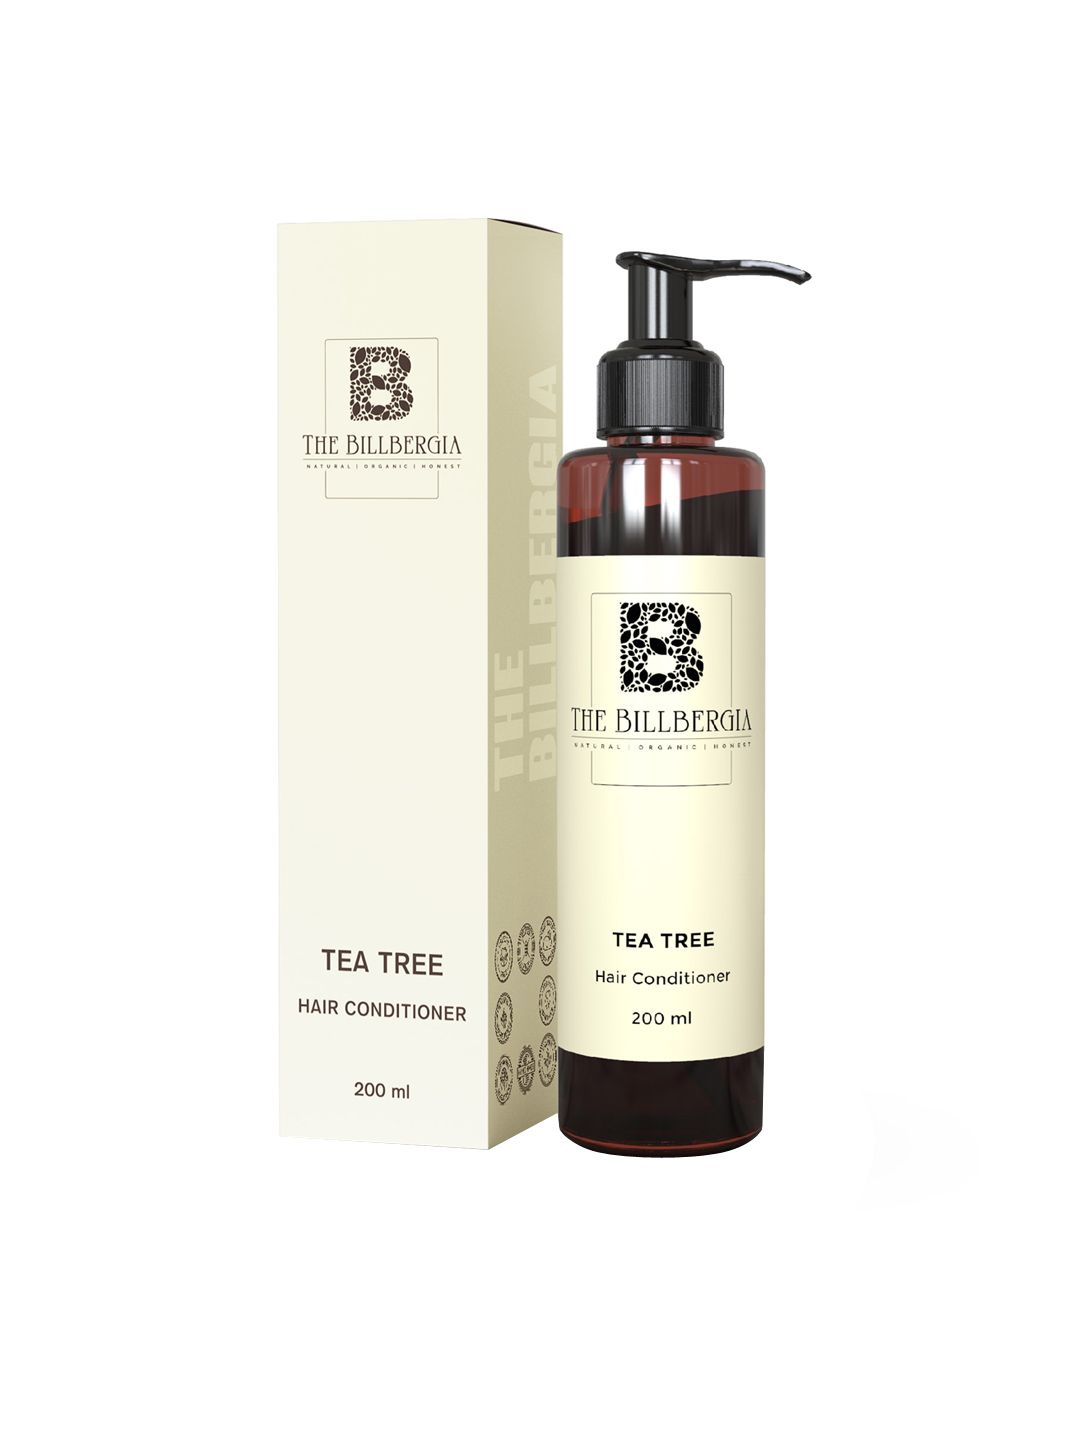 THE BILLBERGIA Tea Tree Hair Conditioner 200 ml Price in India